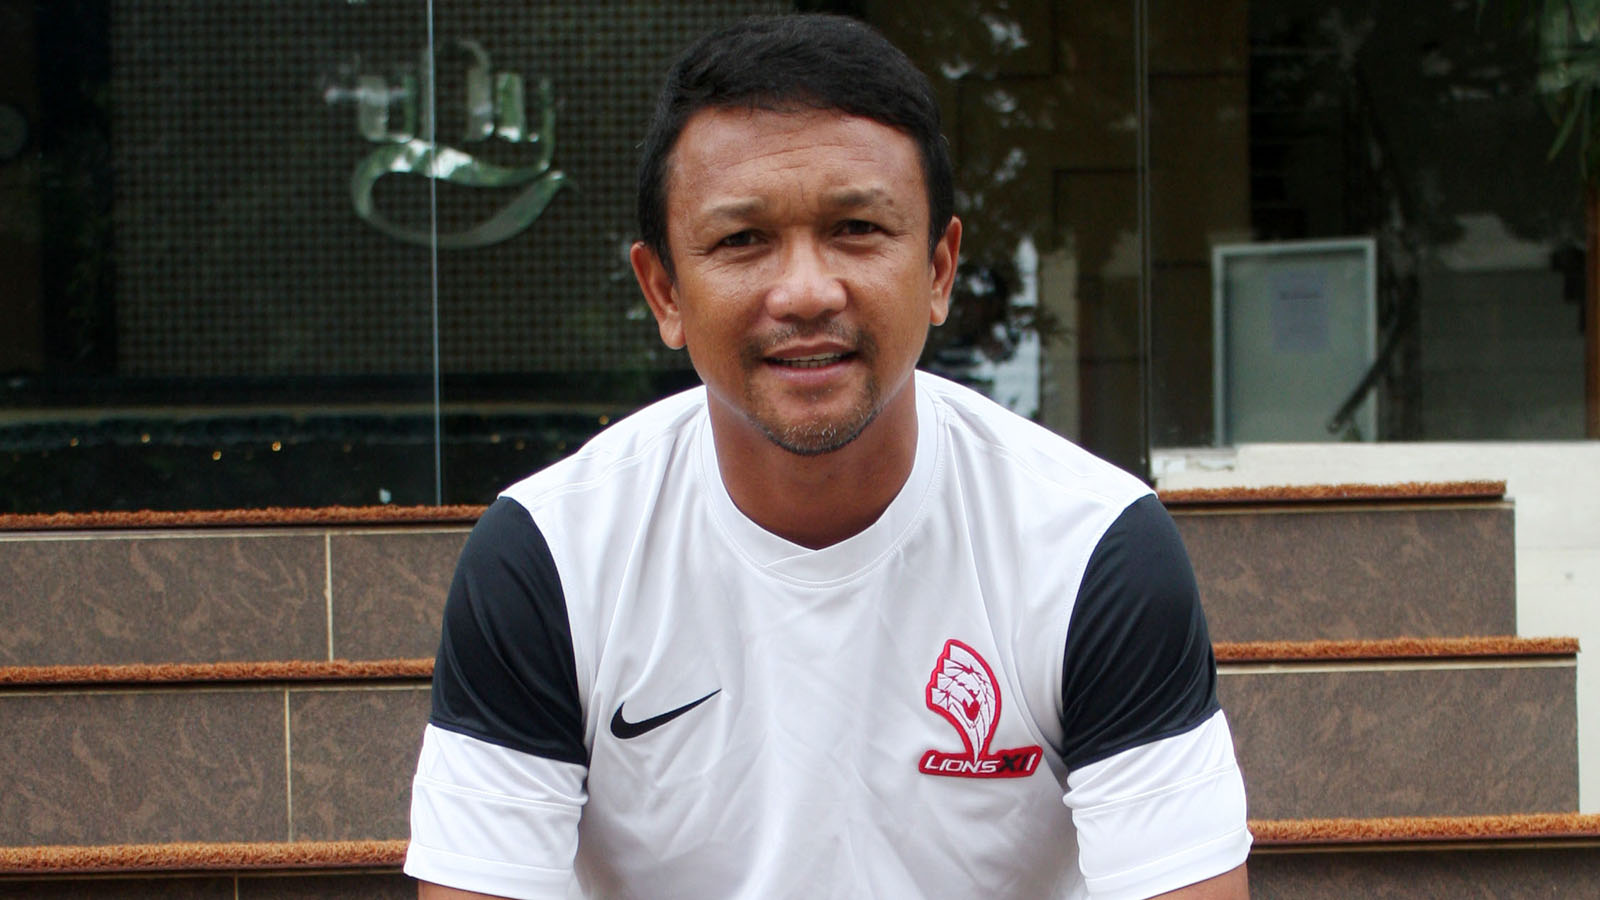 Deretan Pelatih Beken yang Sempat Pimpin Pelita Jaya, dari Danurwindo hingga Mario Kempes